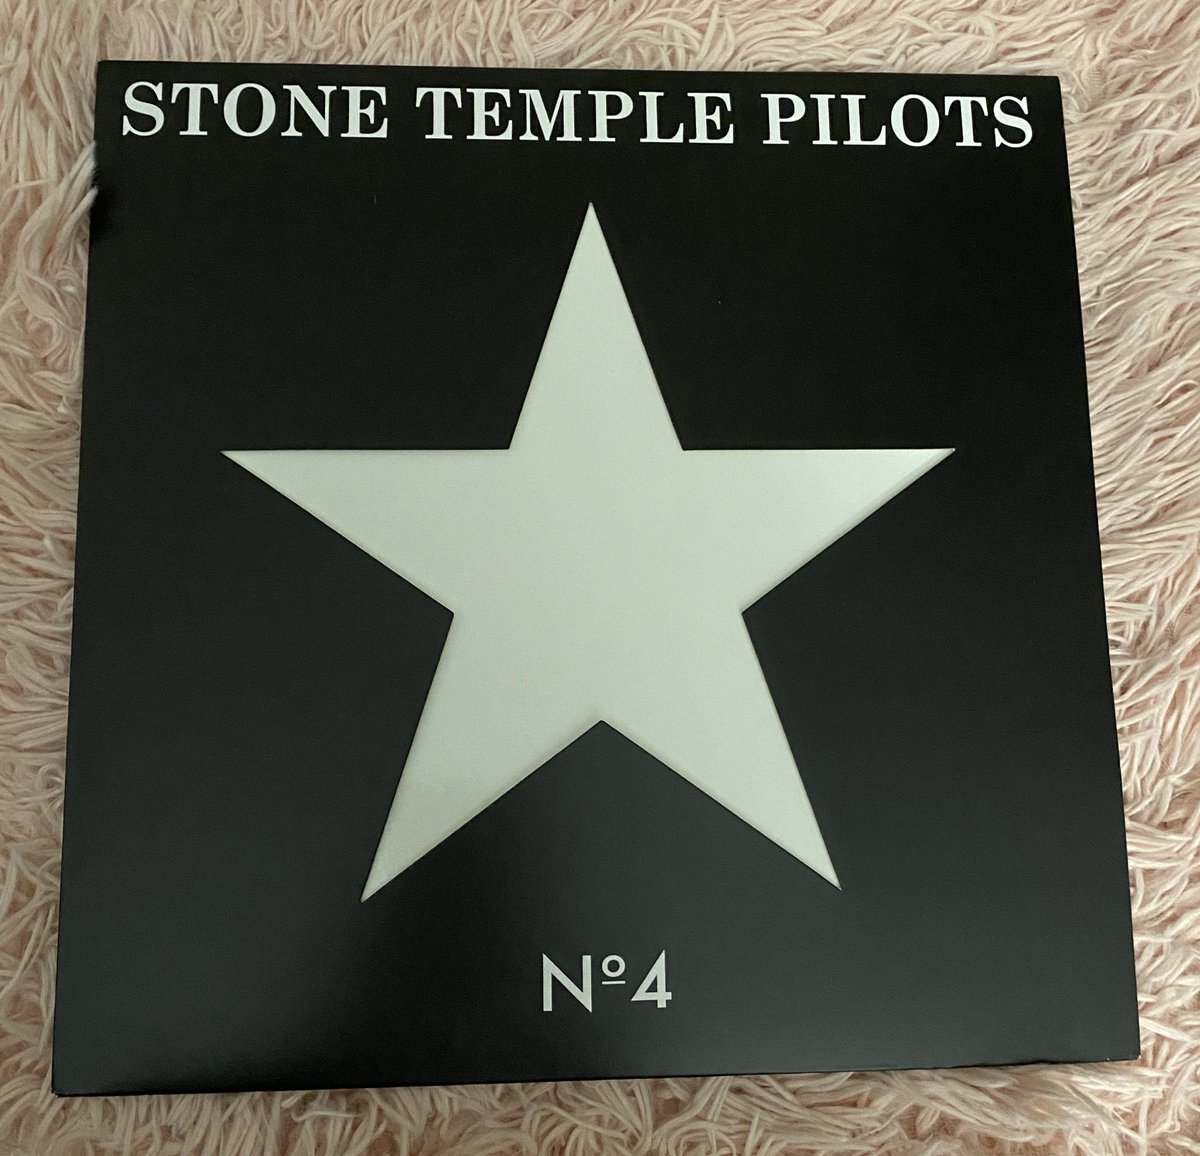 no. 4, stone temple pilots (1999)